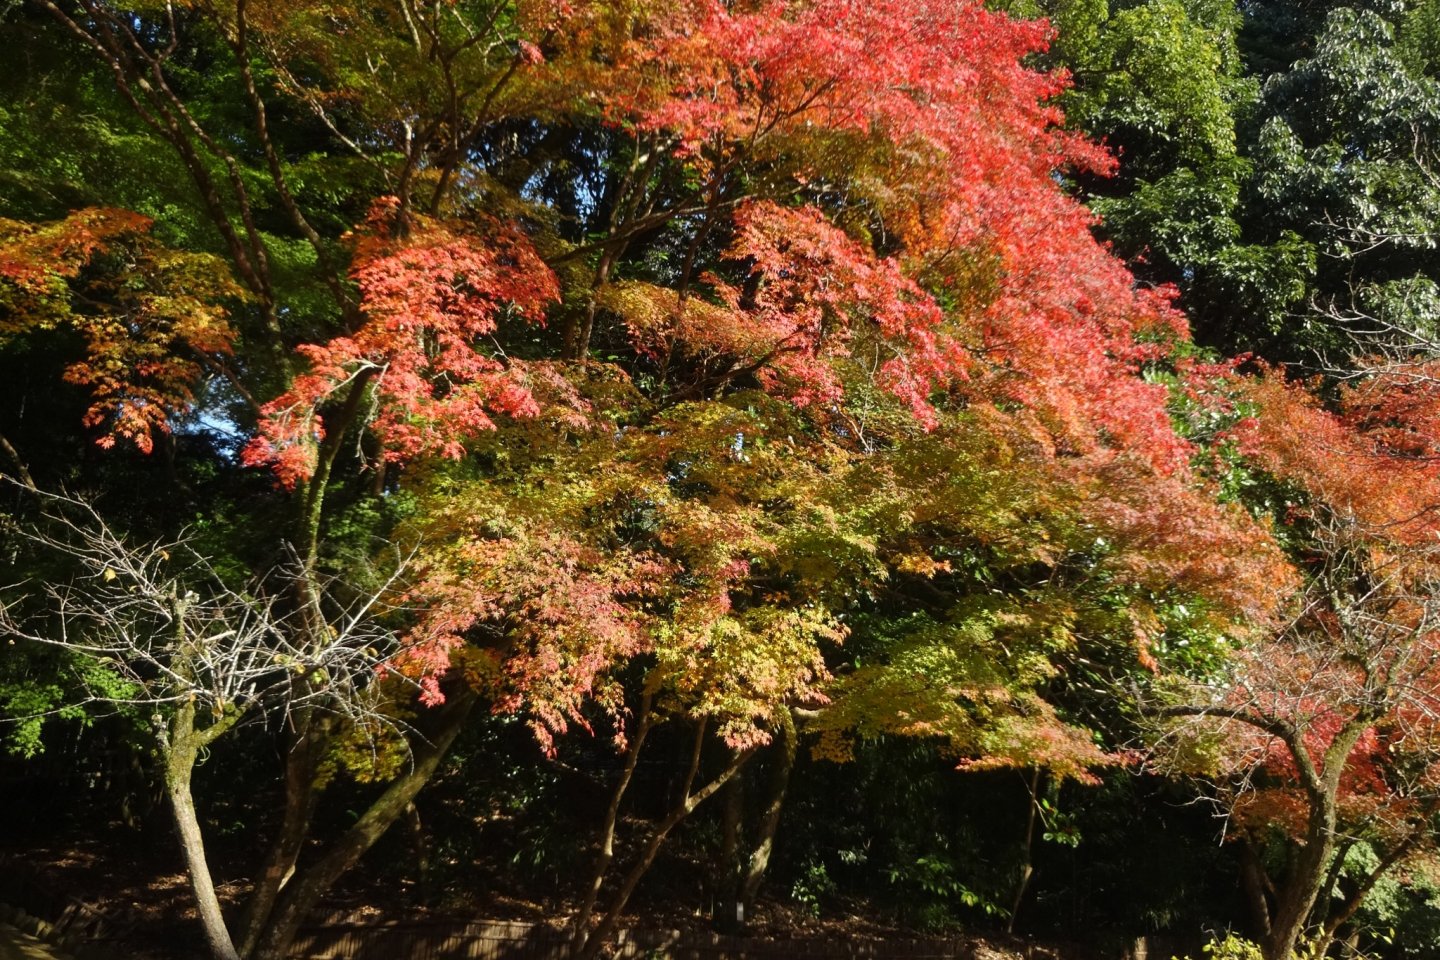 Autumn is a beautiful season to visit Tatsuda Nature Park